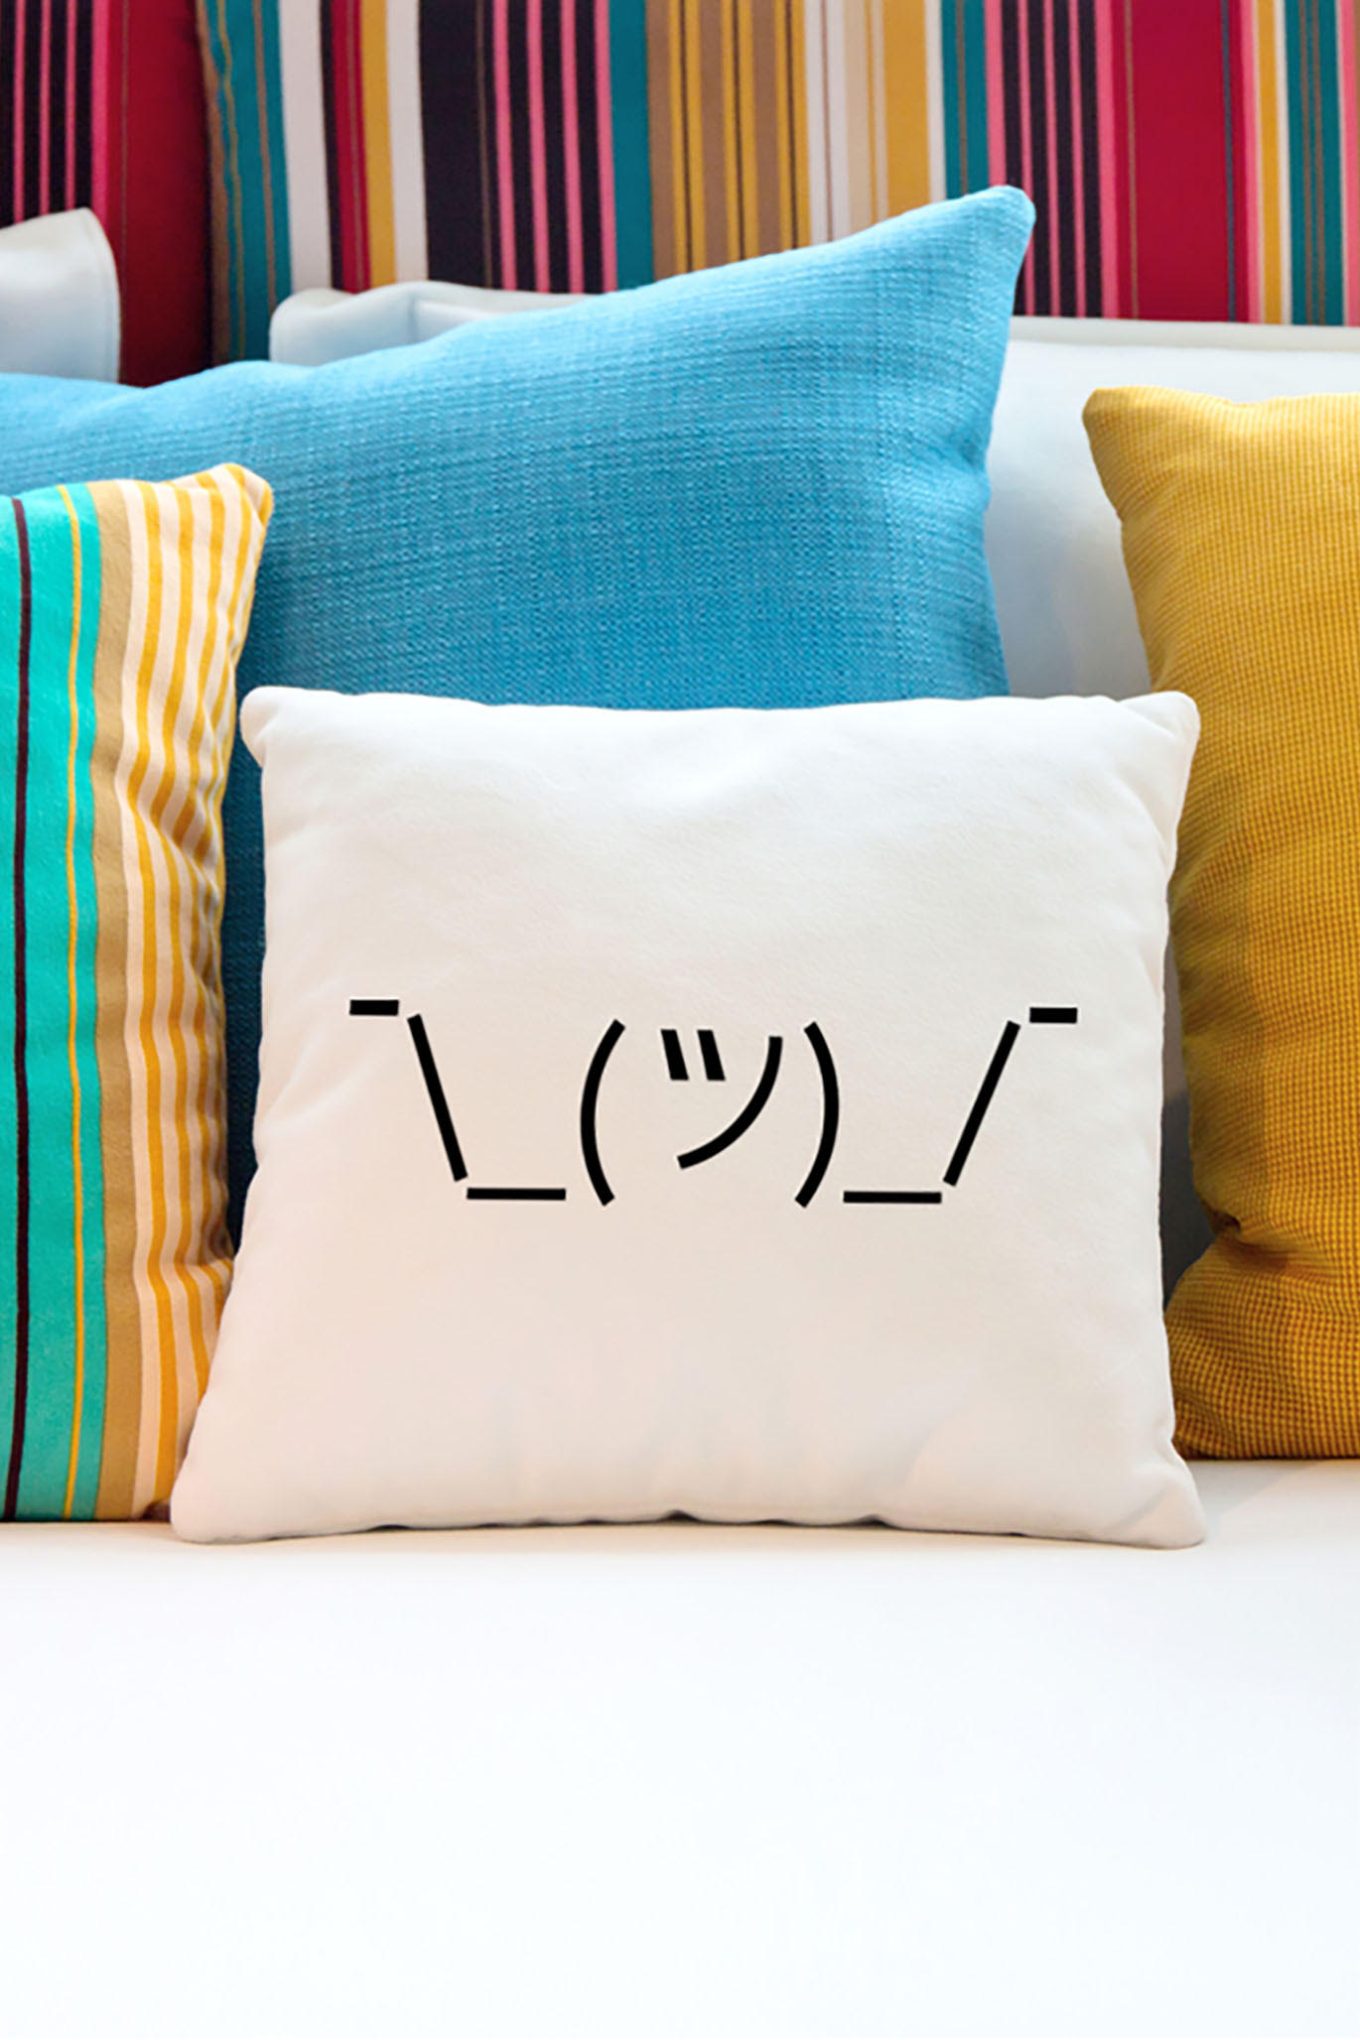 Shrugging emoji on a throw pillow